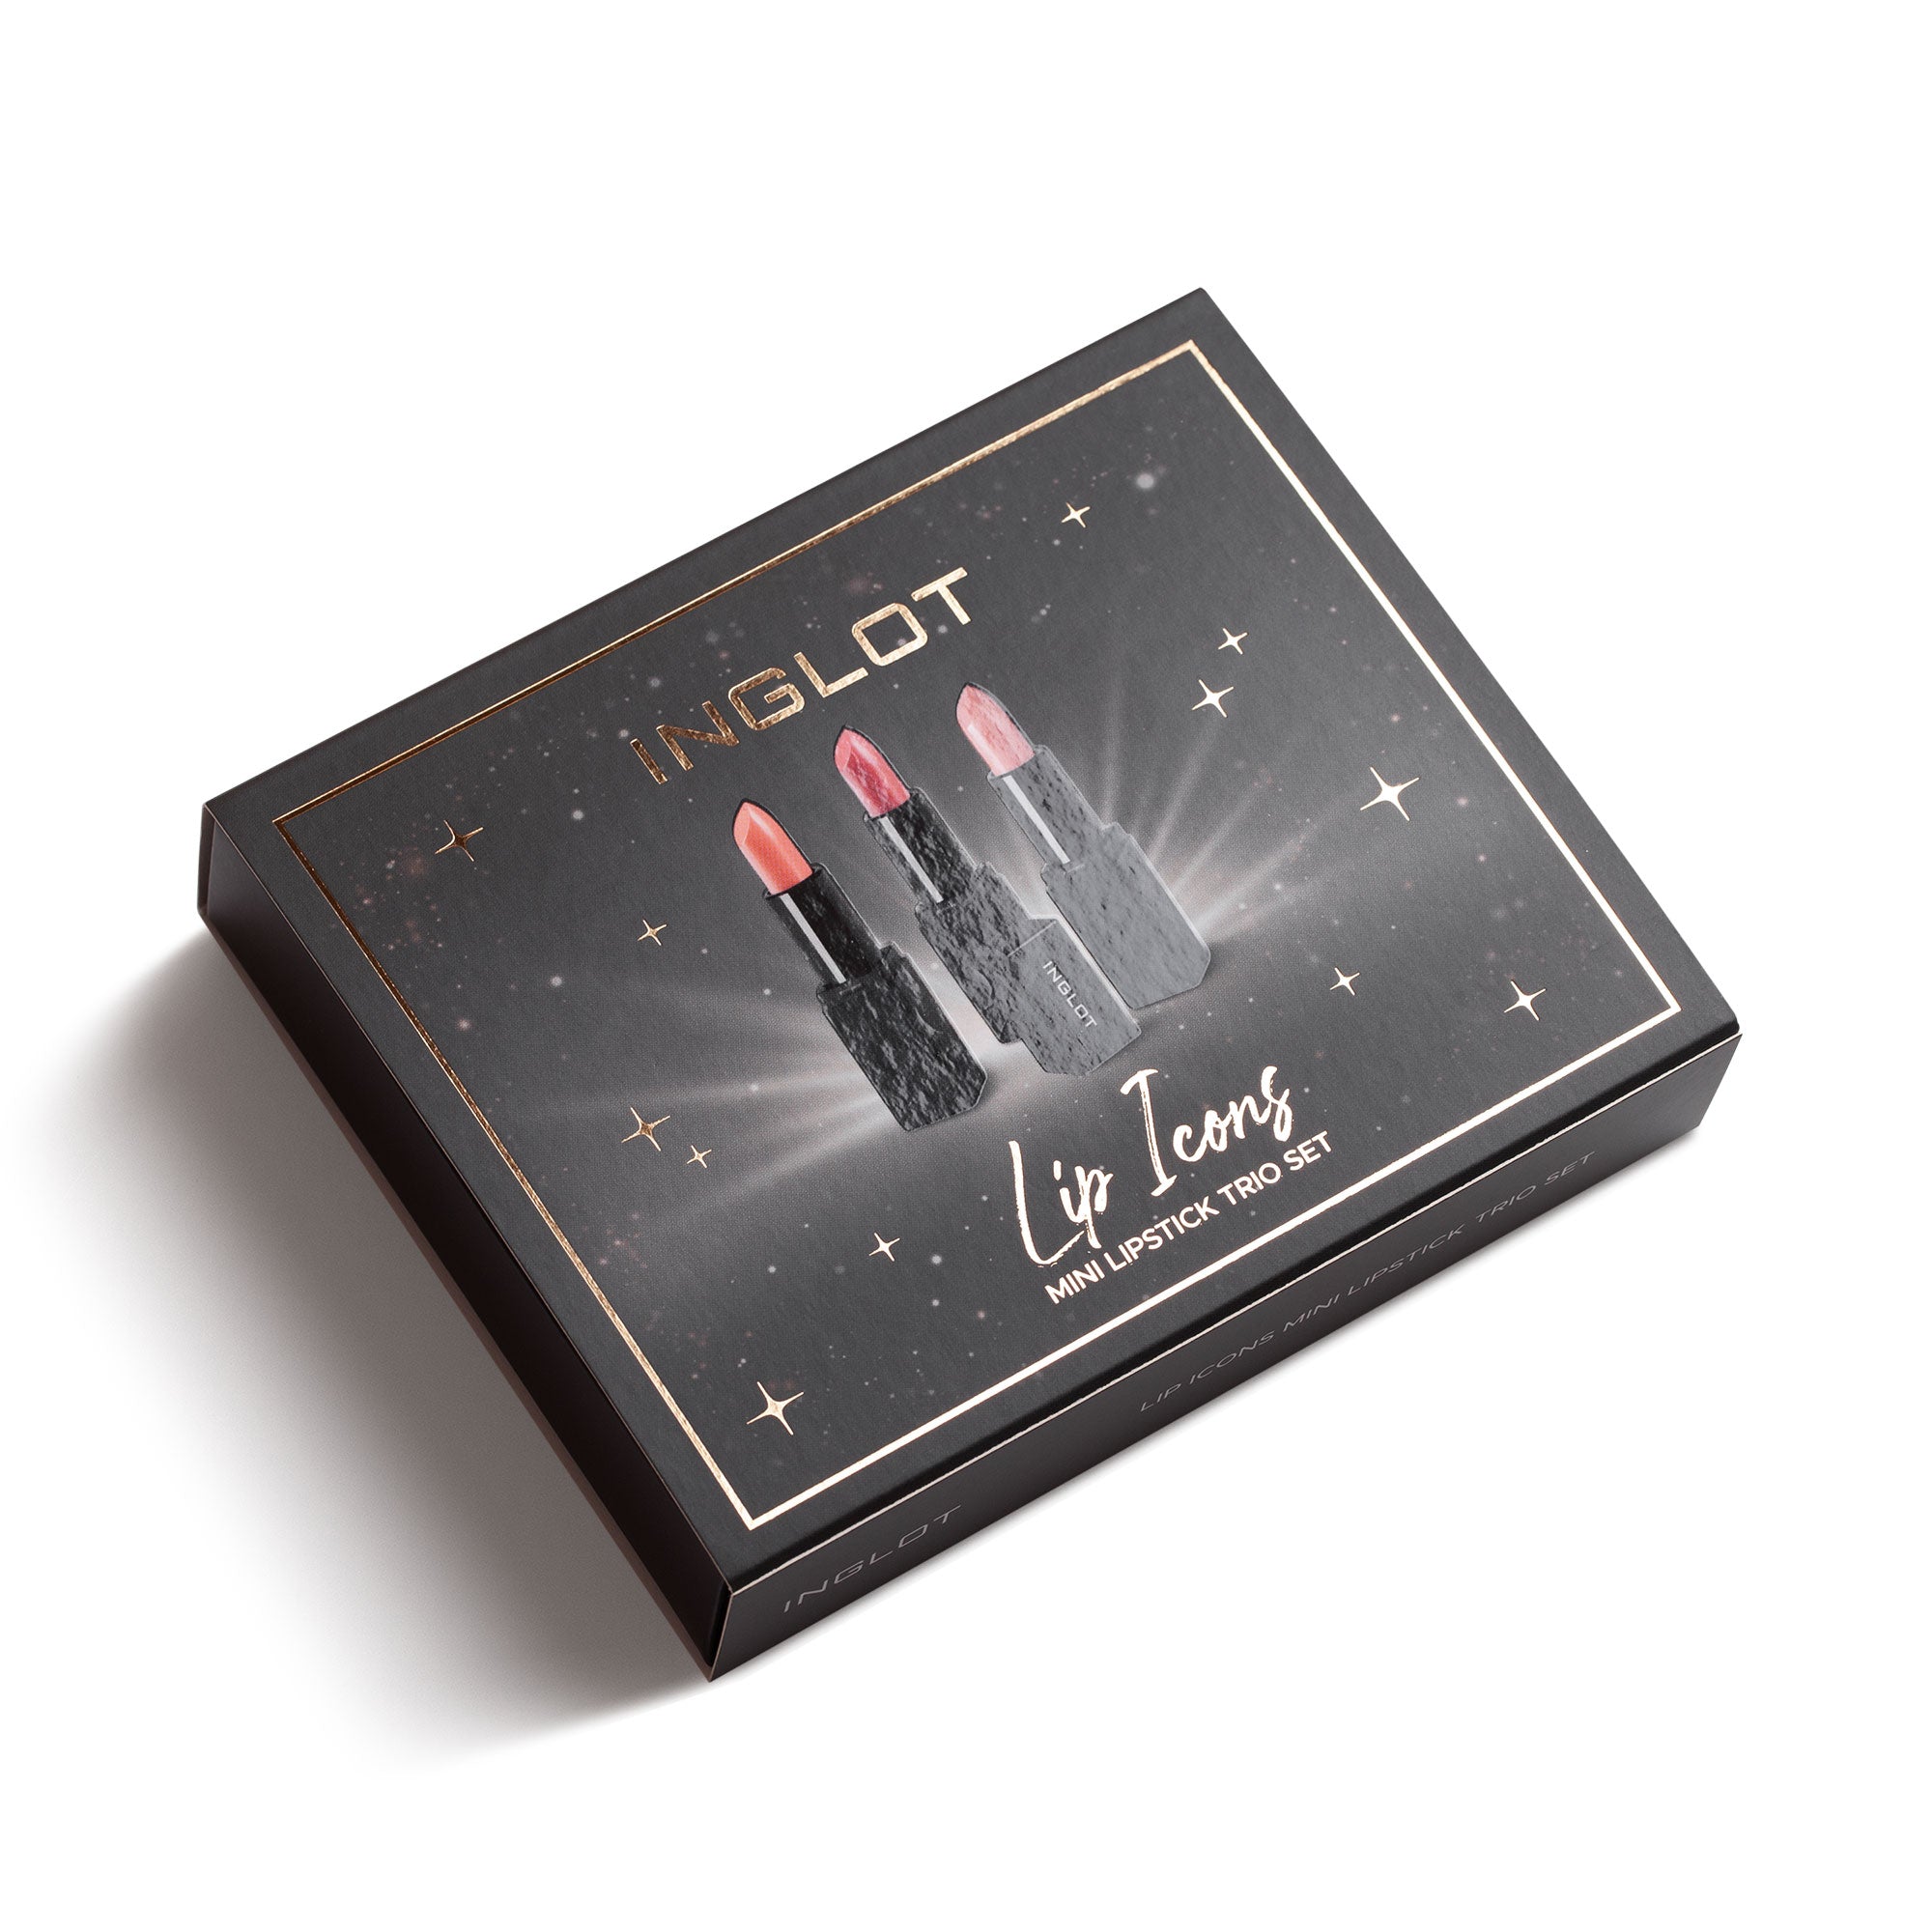 Inglot Lip Icons Mini Lipstick Trio Gift Set, packaging